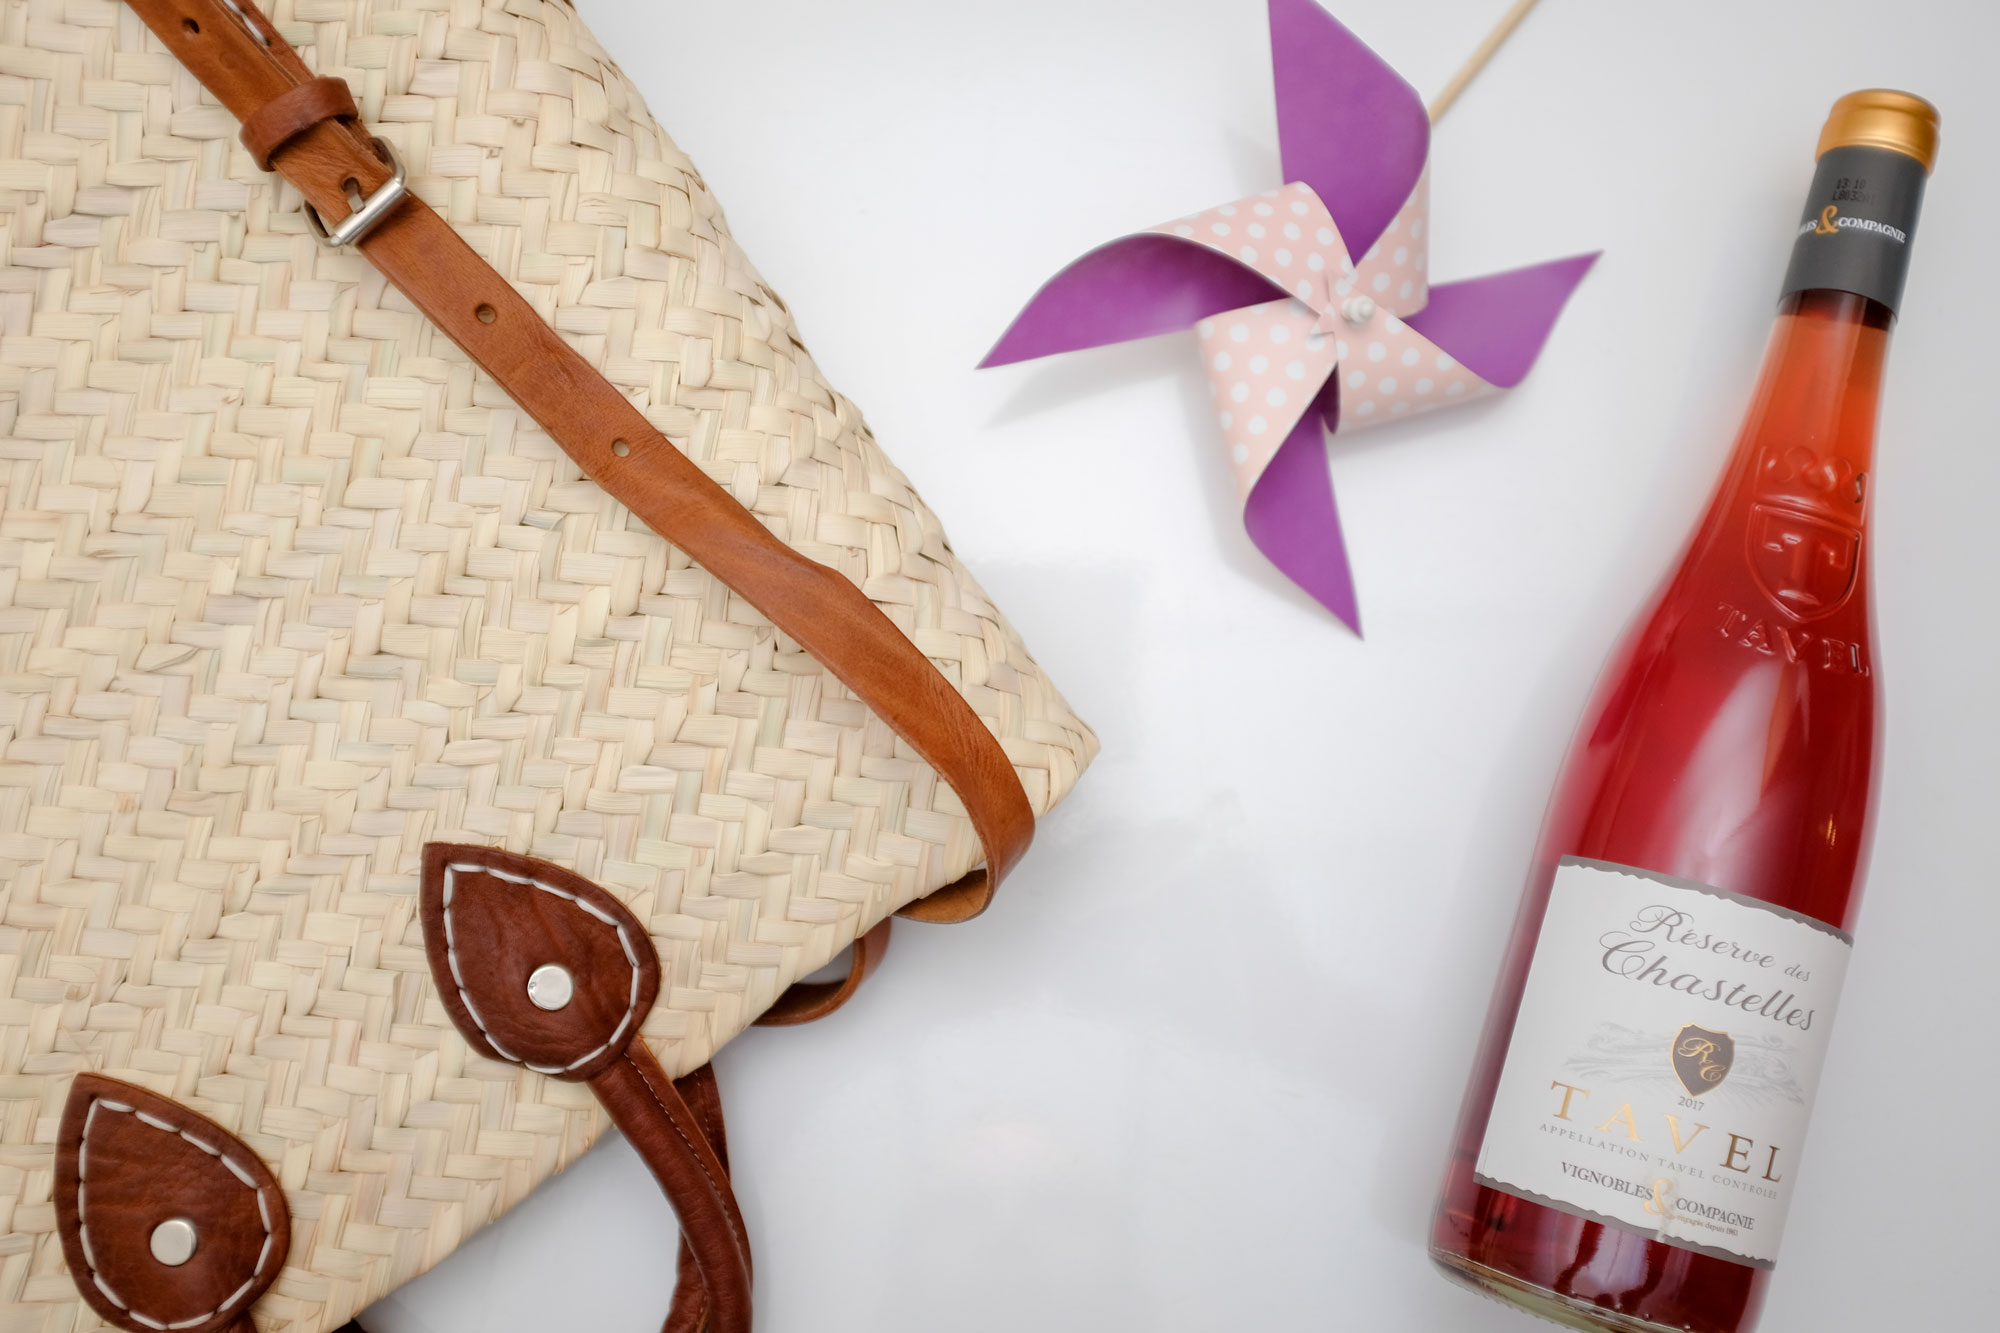 Woven bag, pinwheel, and bottle of rose wine laid flat